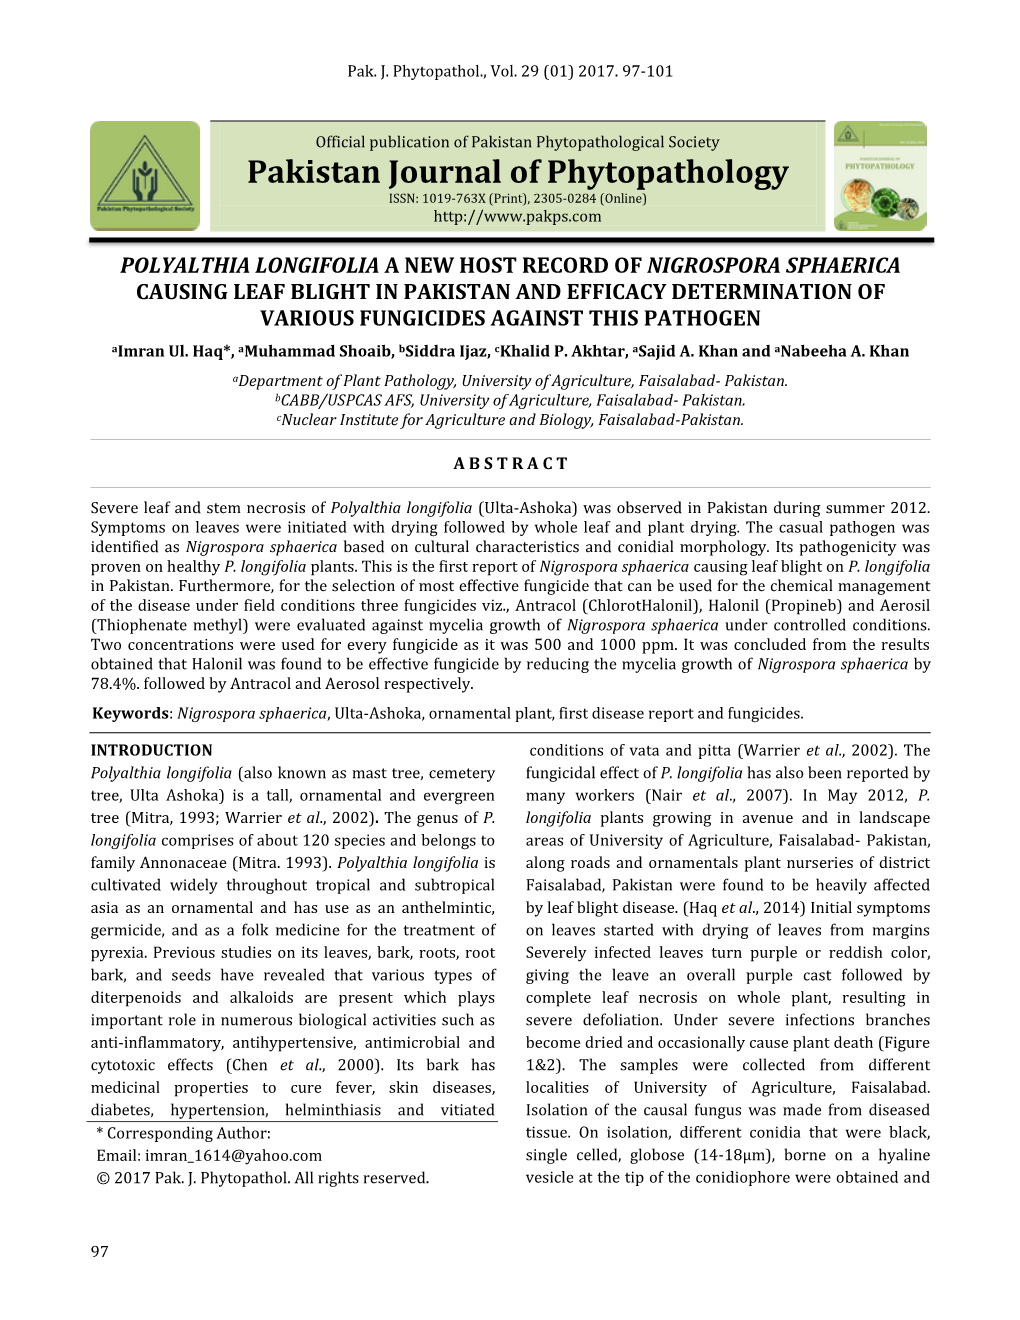 Pakistan Journal of Phytopathology ISSN: 1019-763X (Print), 2305-0284 (Online)